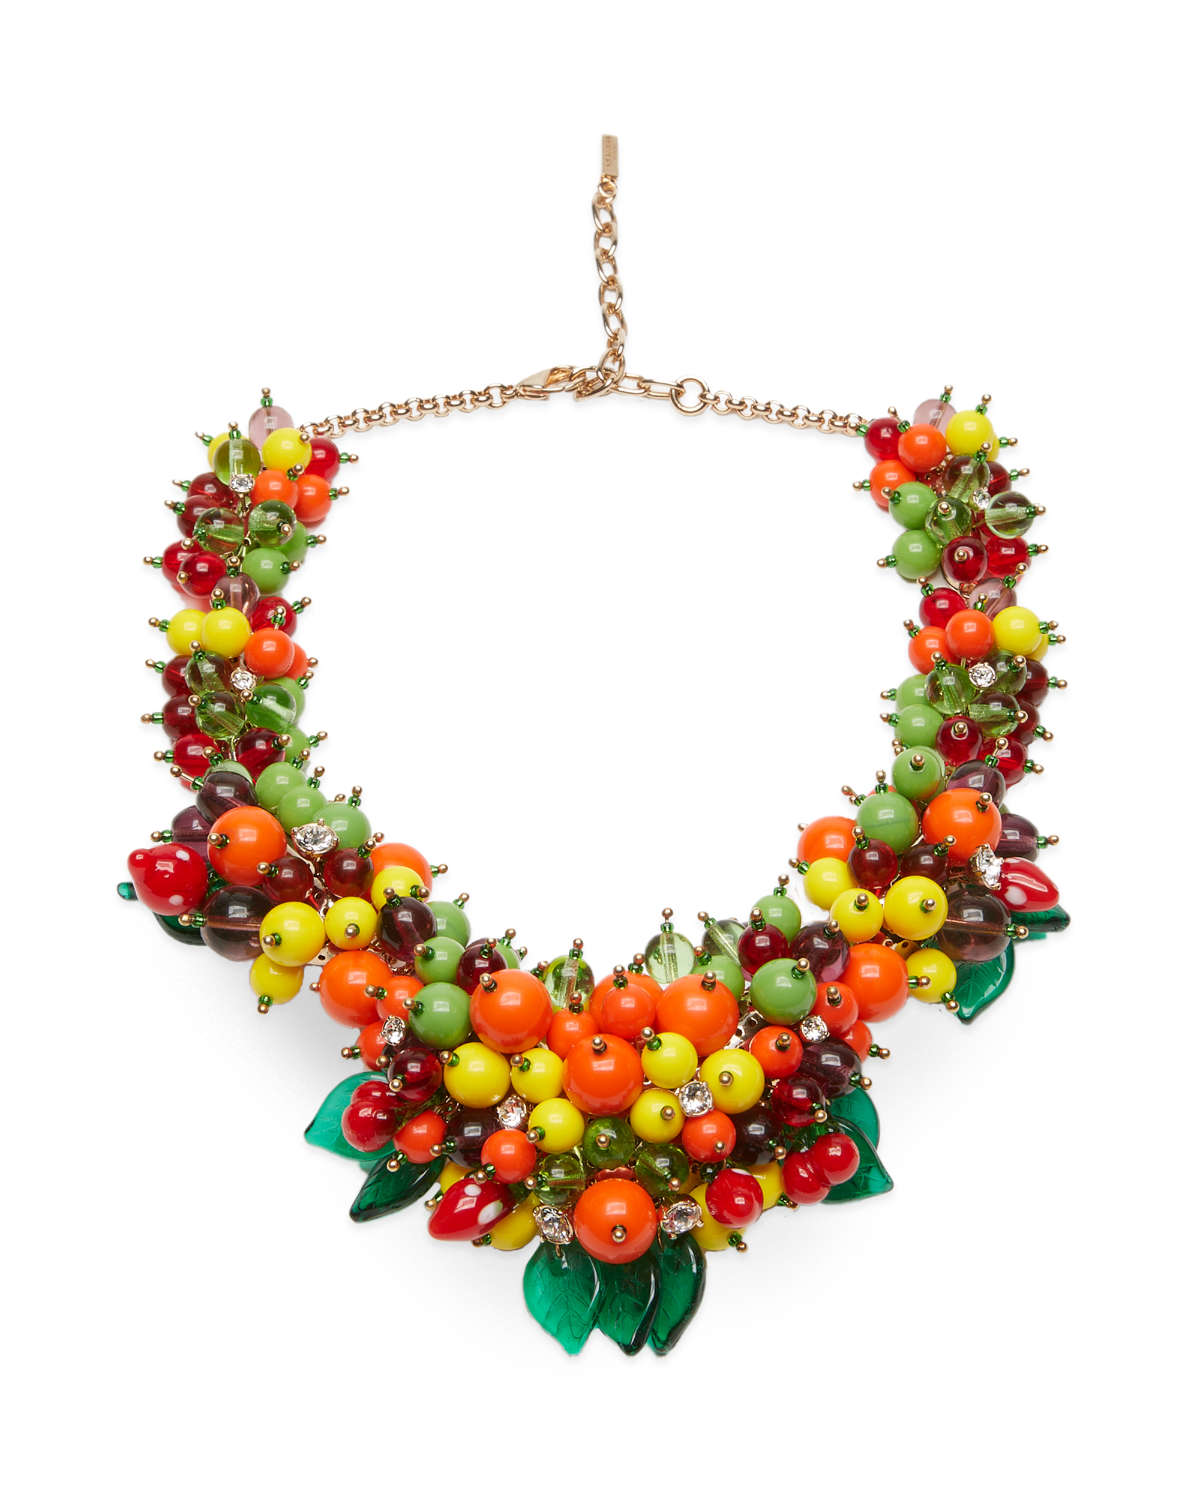 Aquazzura Presents Its Beautiful SS21 Fashion Jewelry Collection